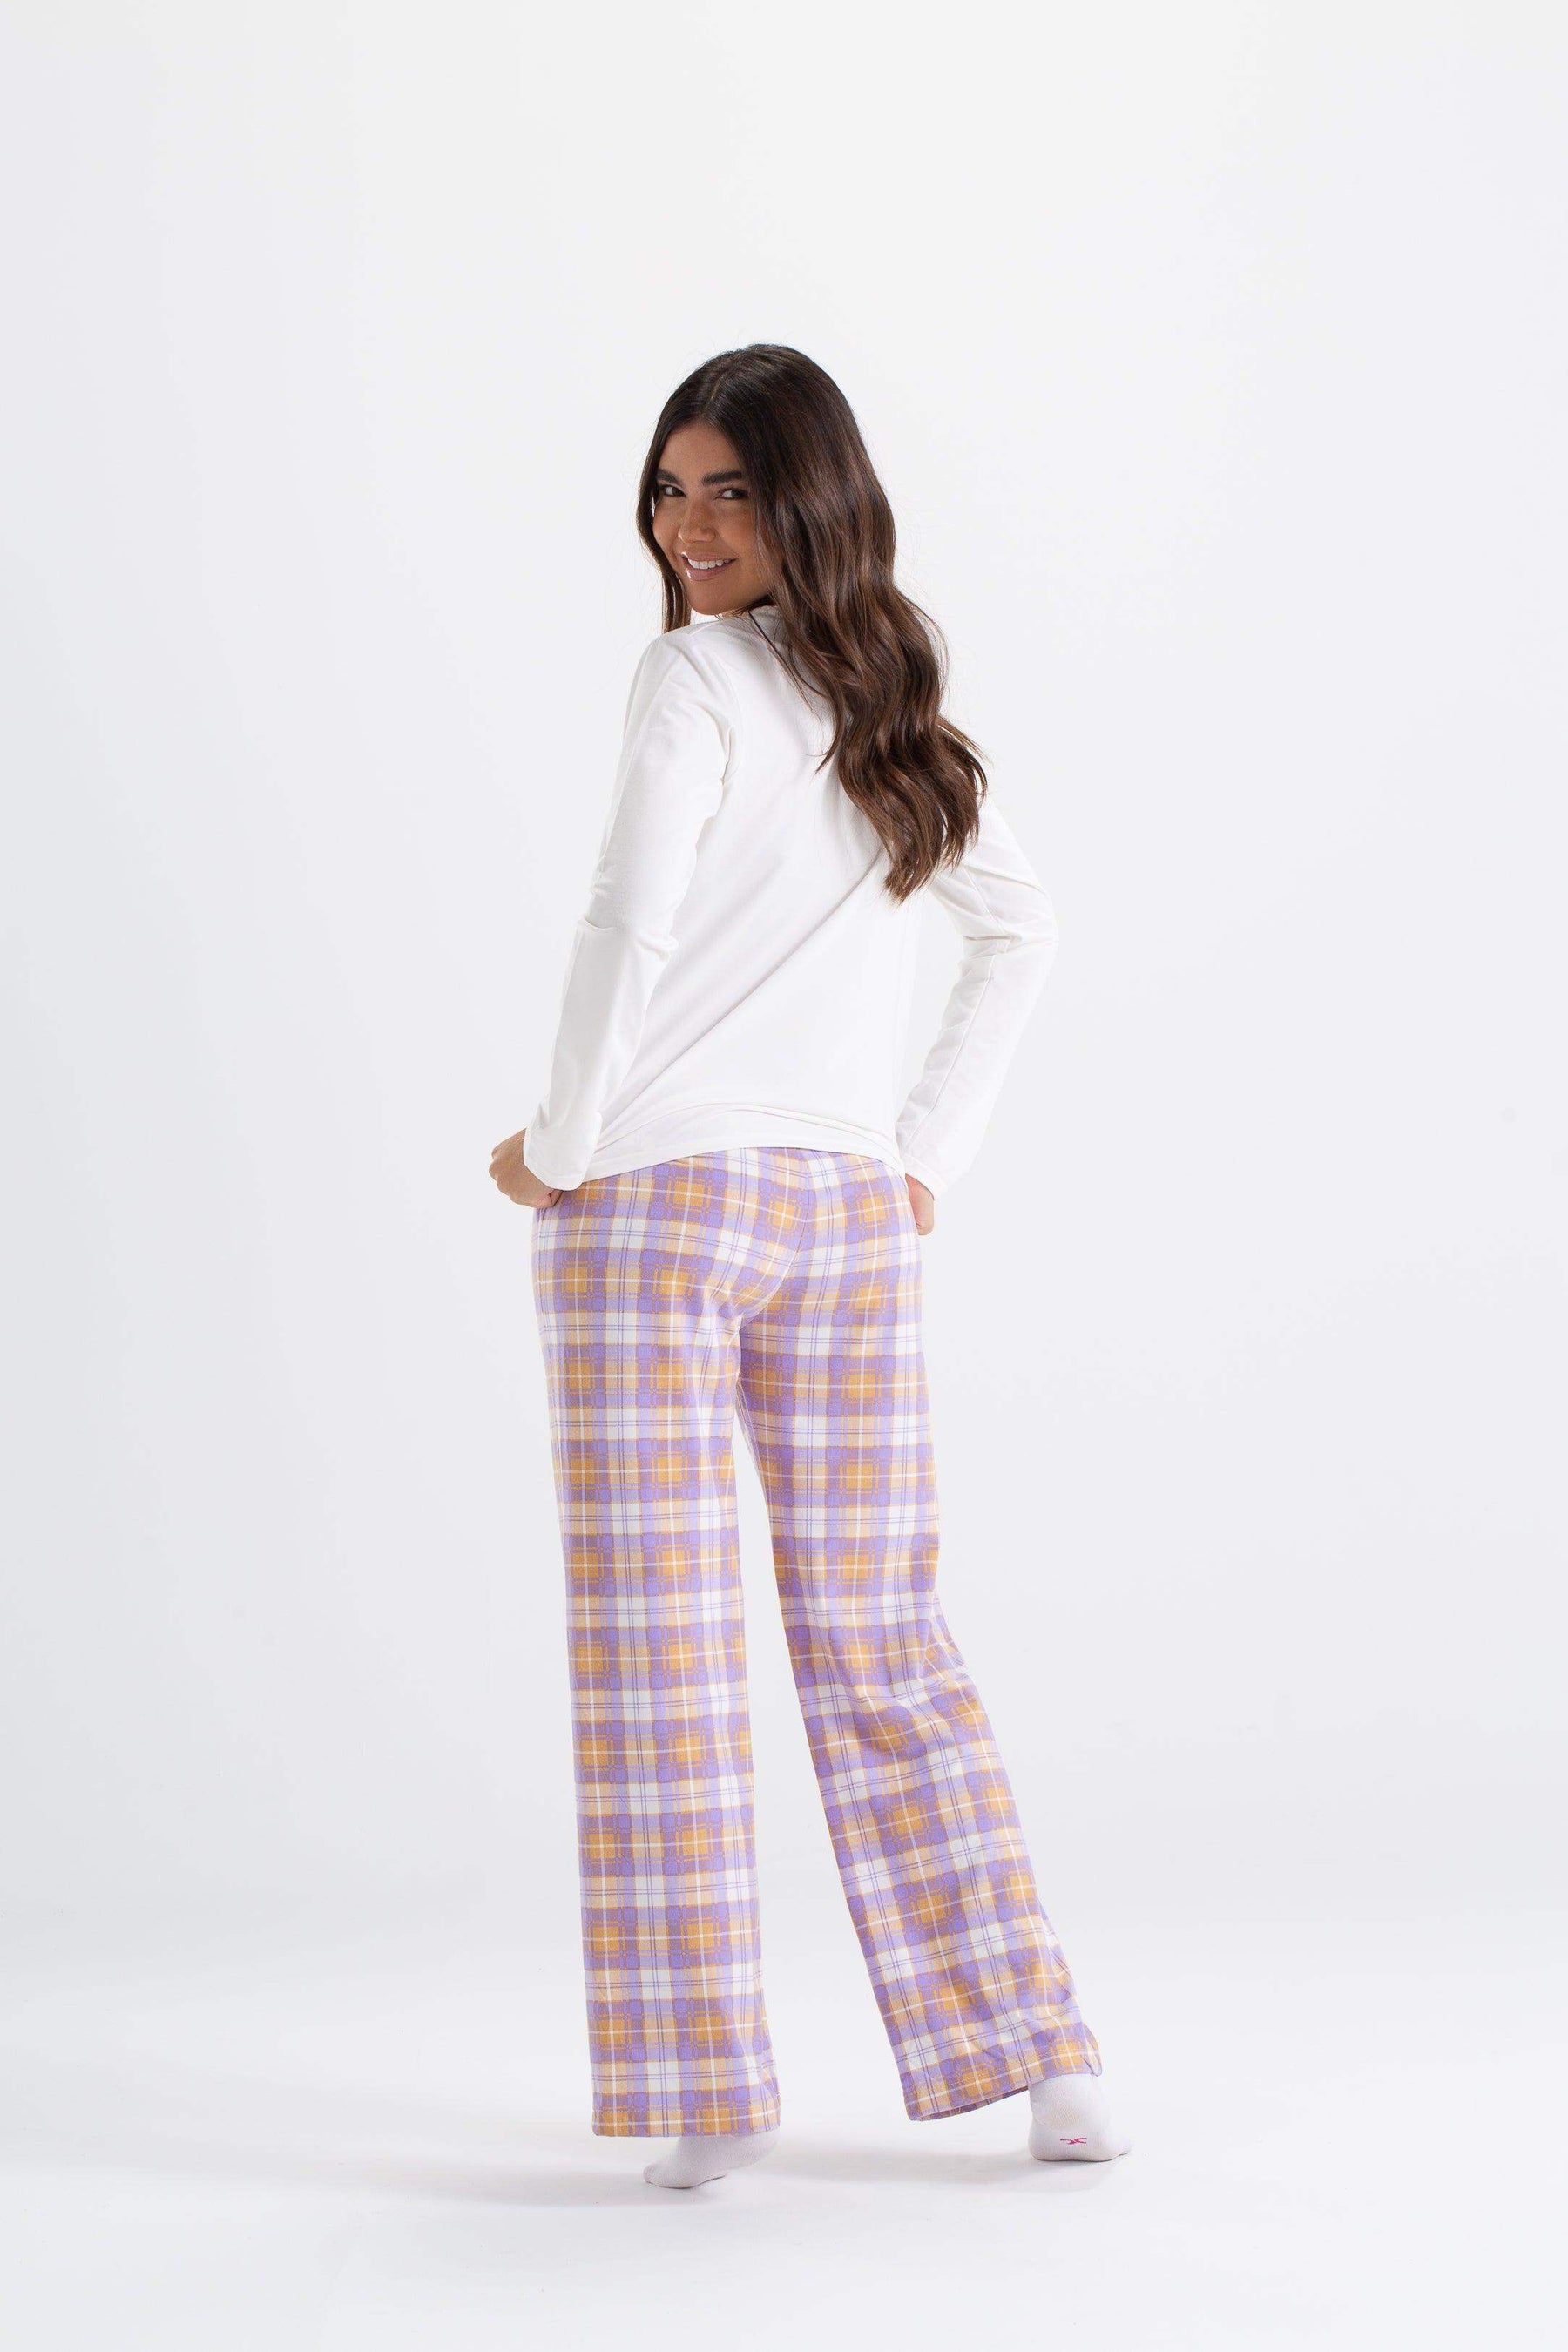 Lilac Checkers Pyjama Set - Carina - كارينا